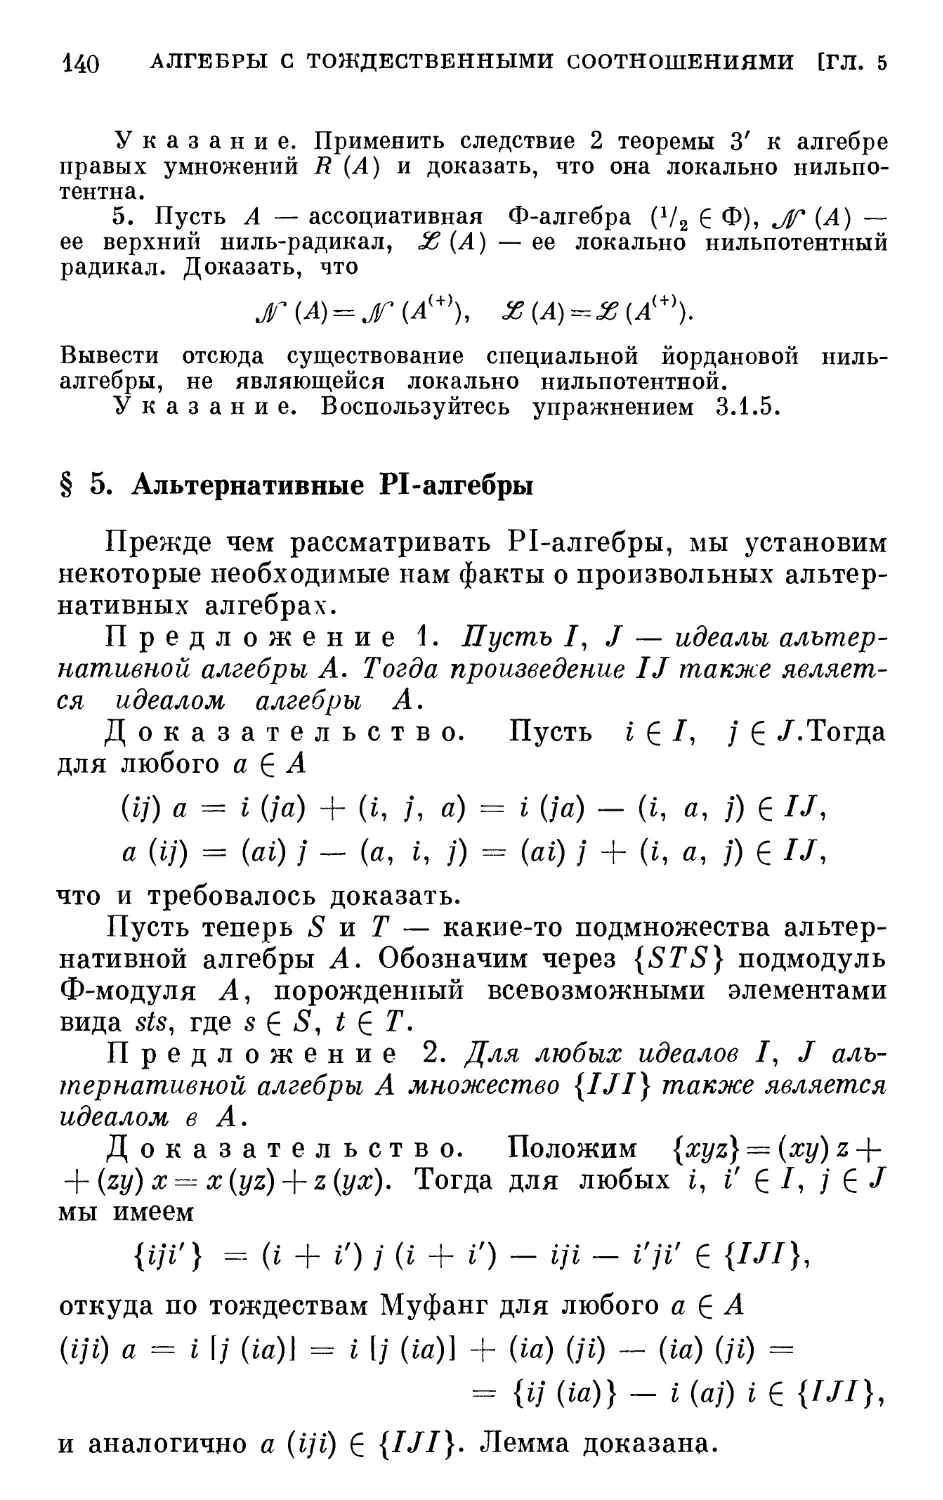 § 5. Альтернативные PI-алгебры